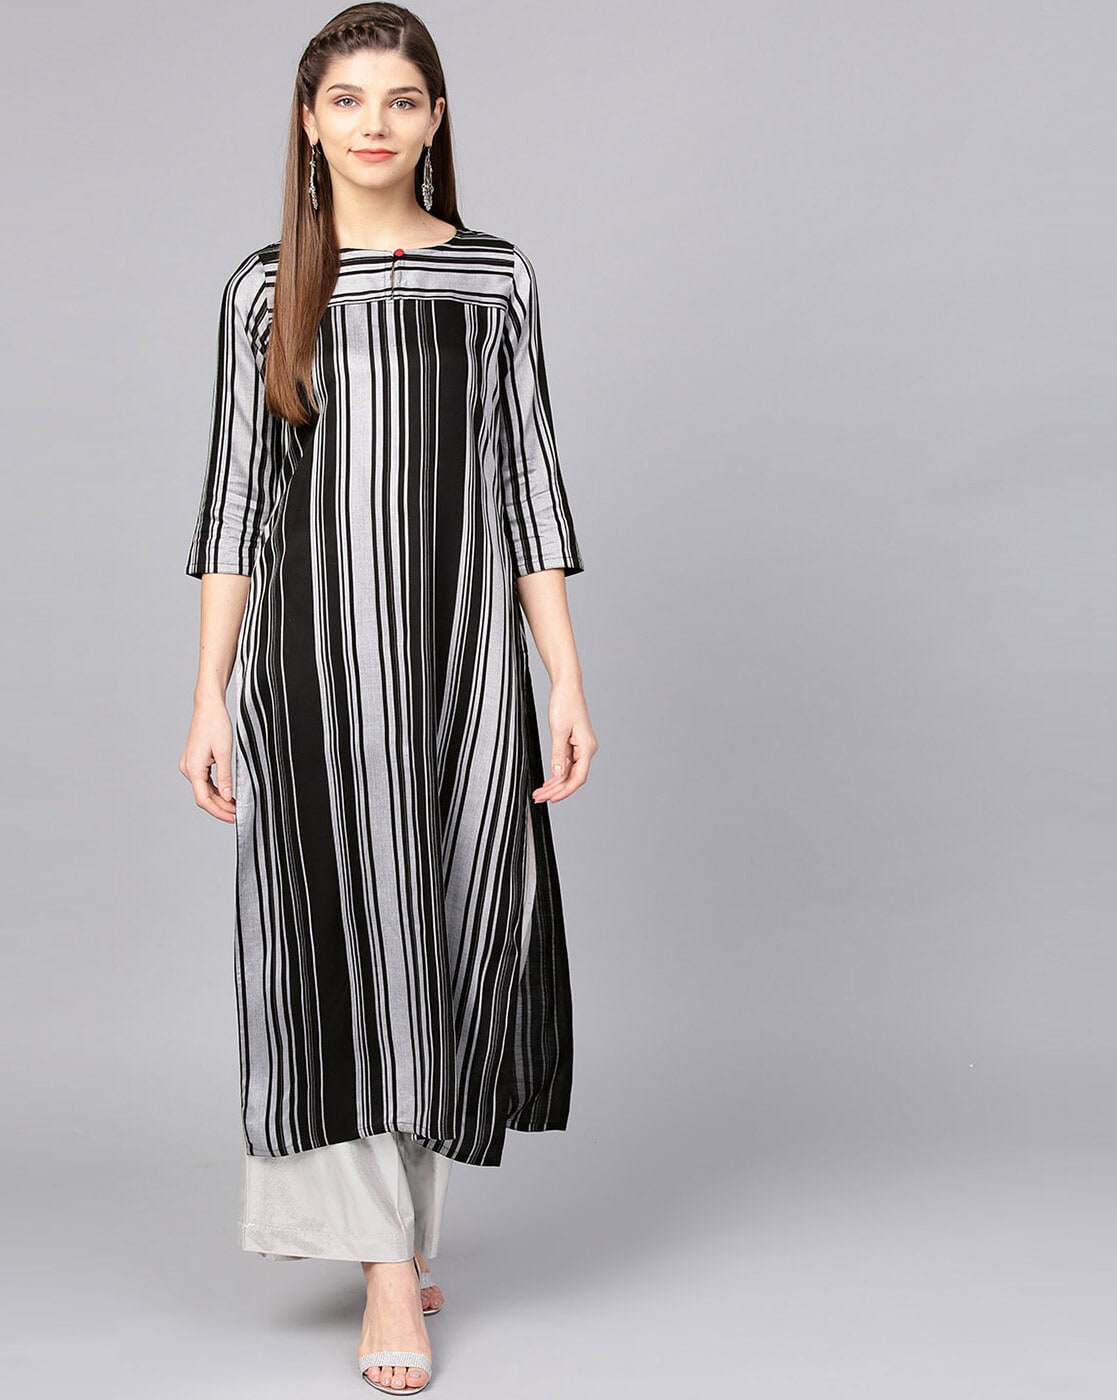 Buy Plus Size Black White Vertical Stripe Printed Kurti Online For Women   Amydus